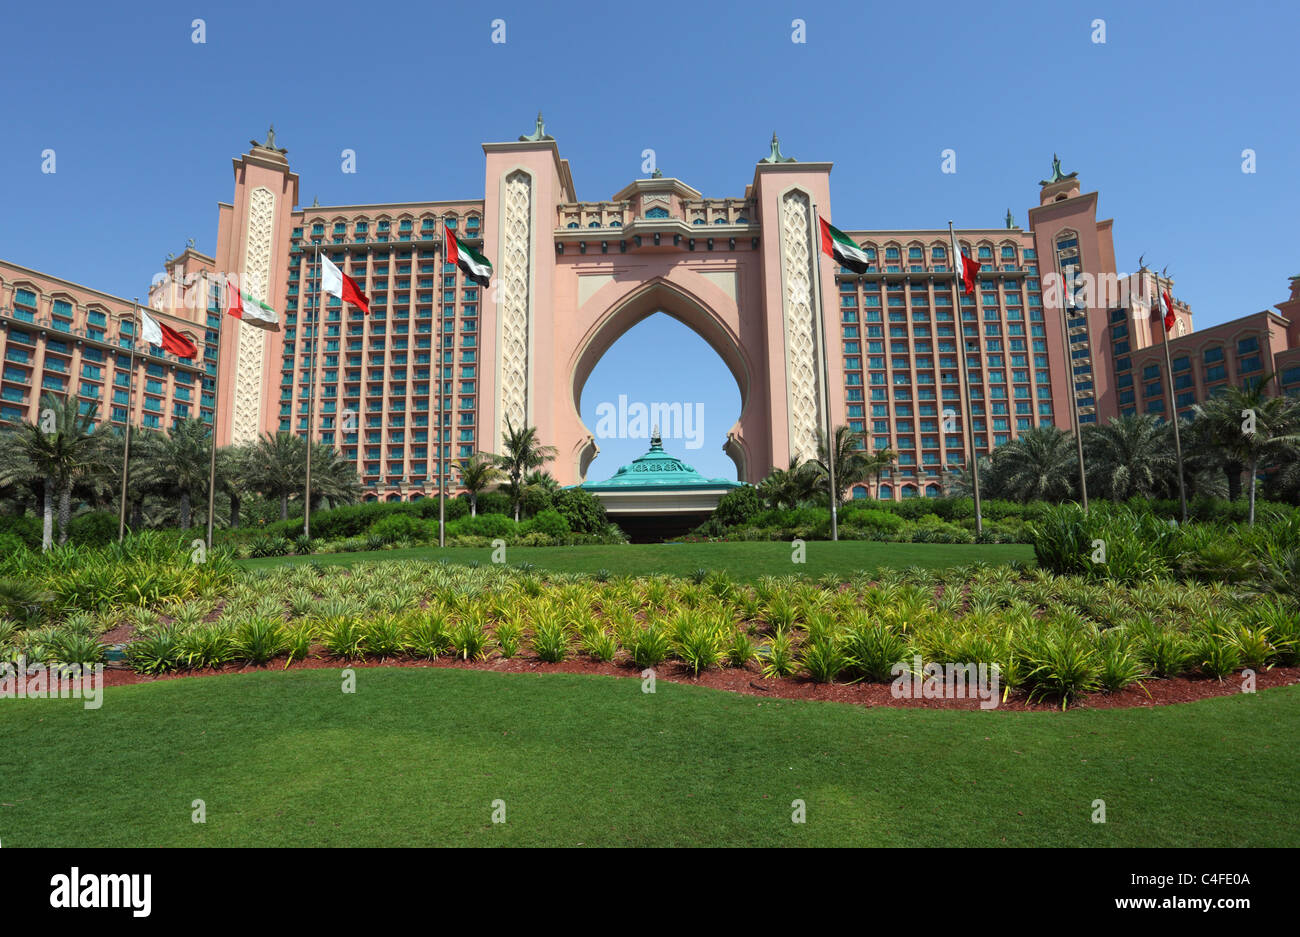 Atlantis, the palm resort hotel in Dubai Stock Photo